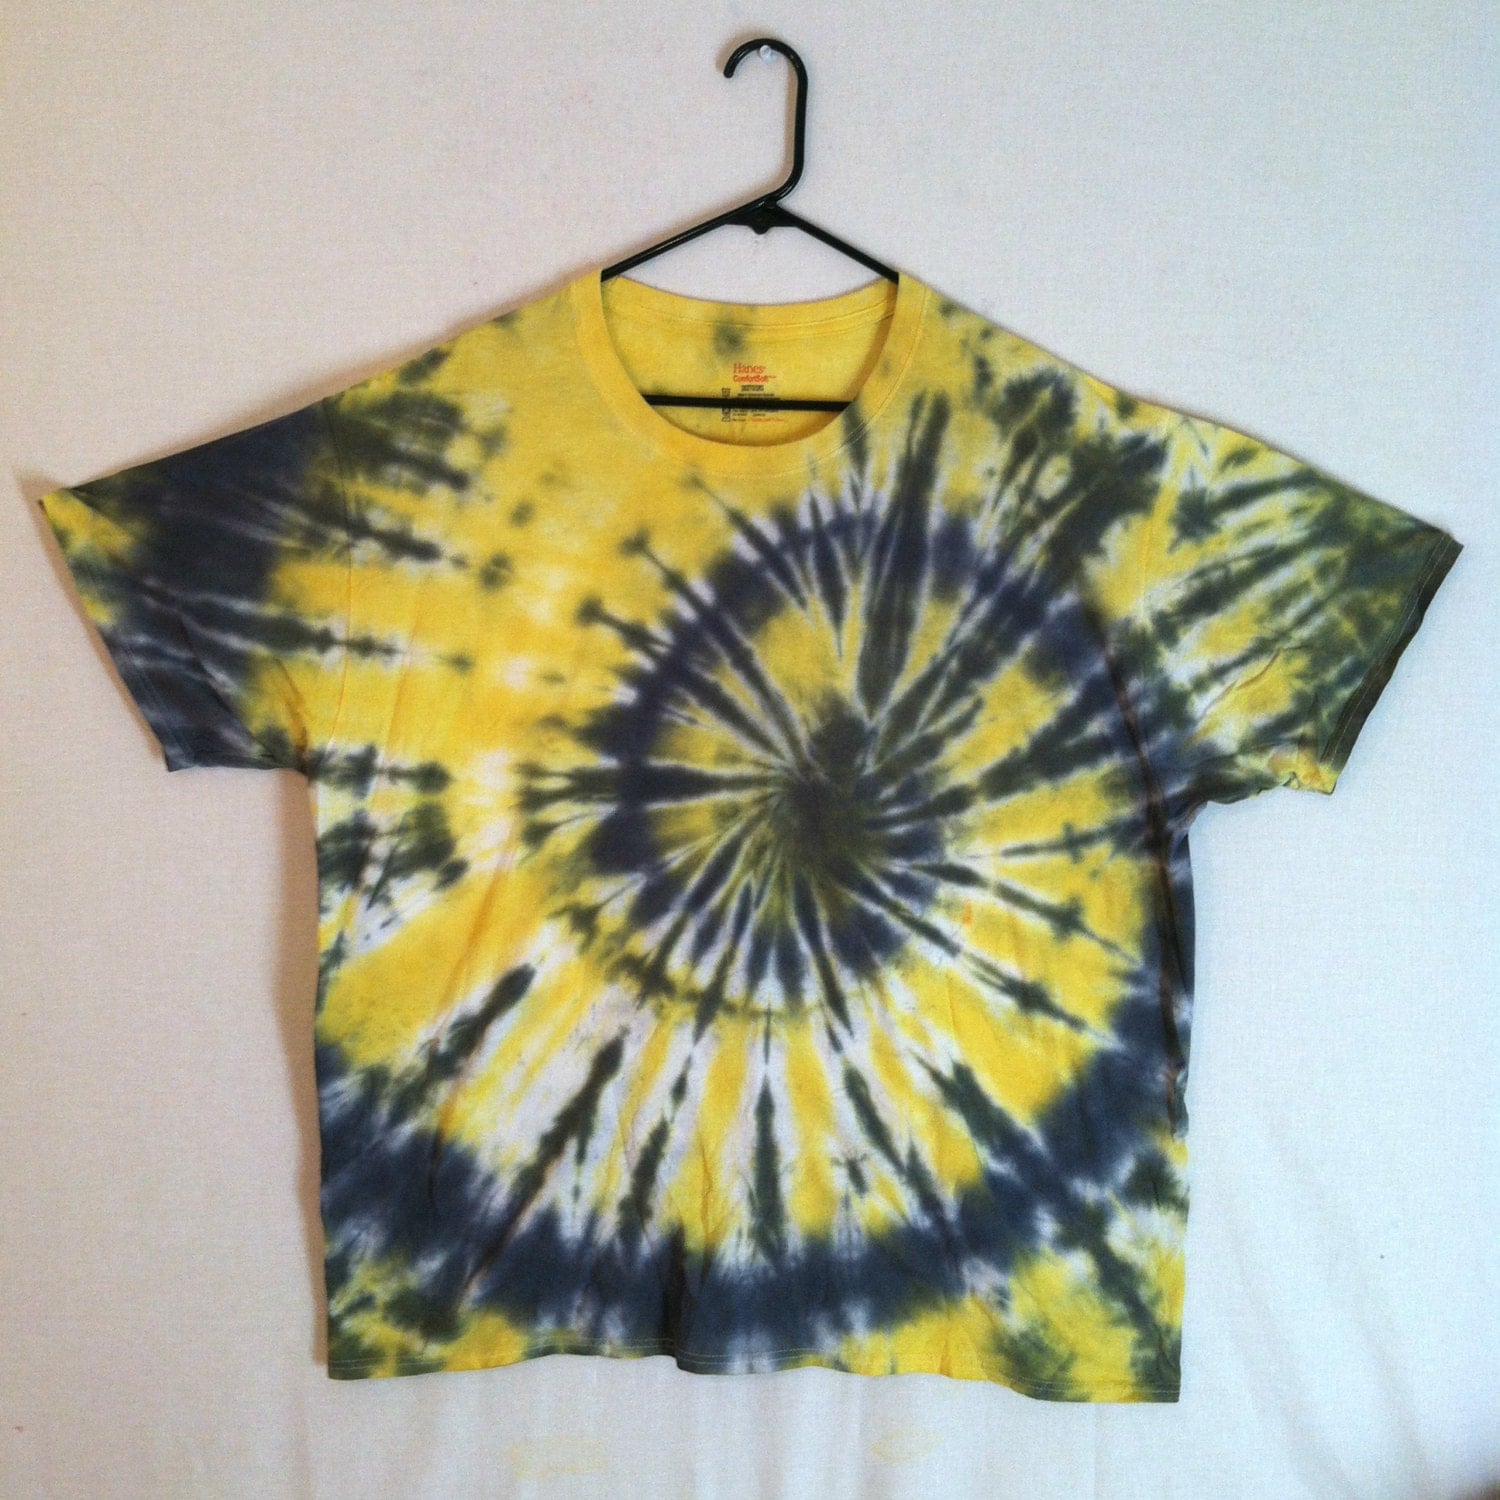 Tie Dye T-Shirt Black and Gold Spiral by RainbowEffectsTieDye